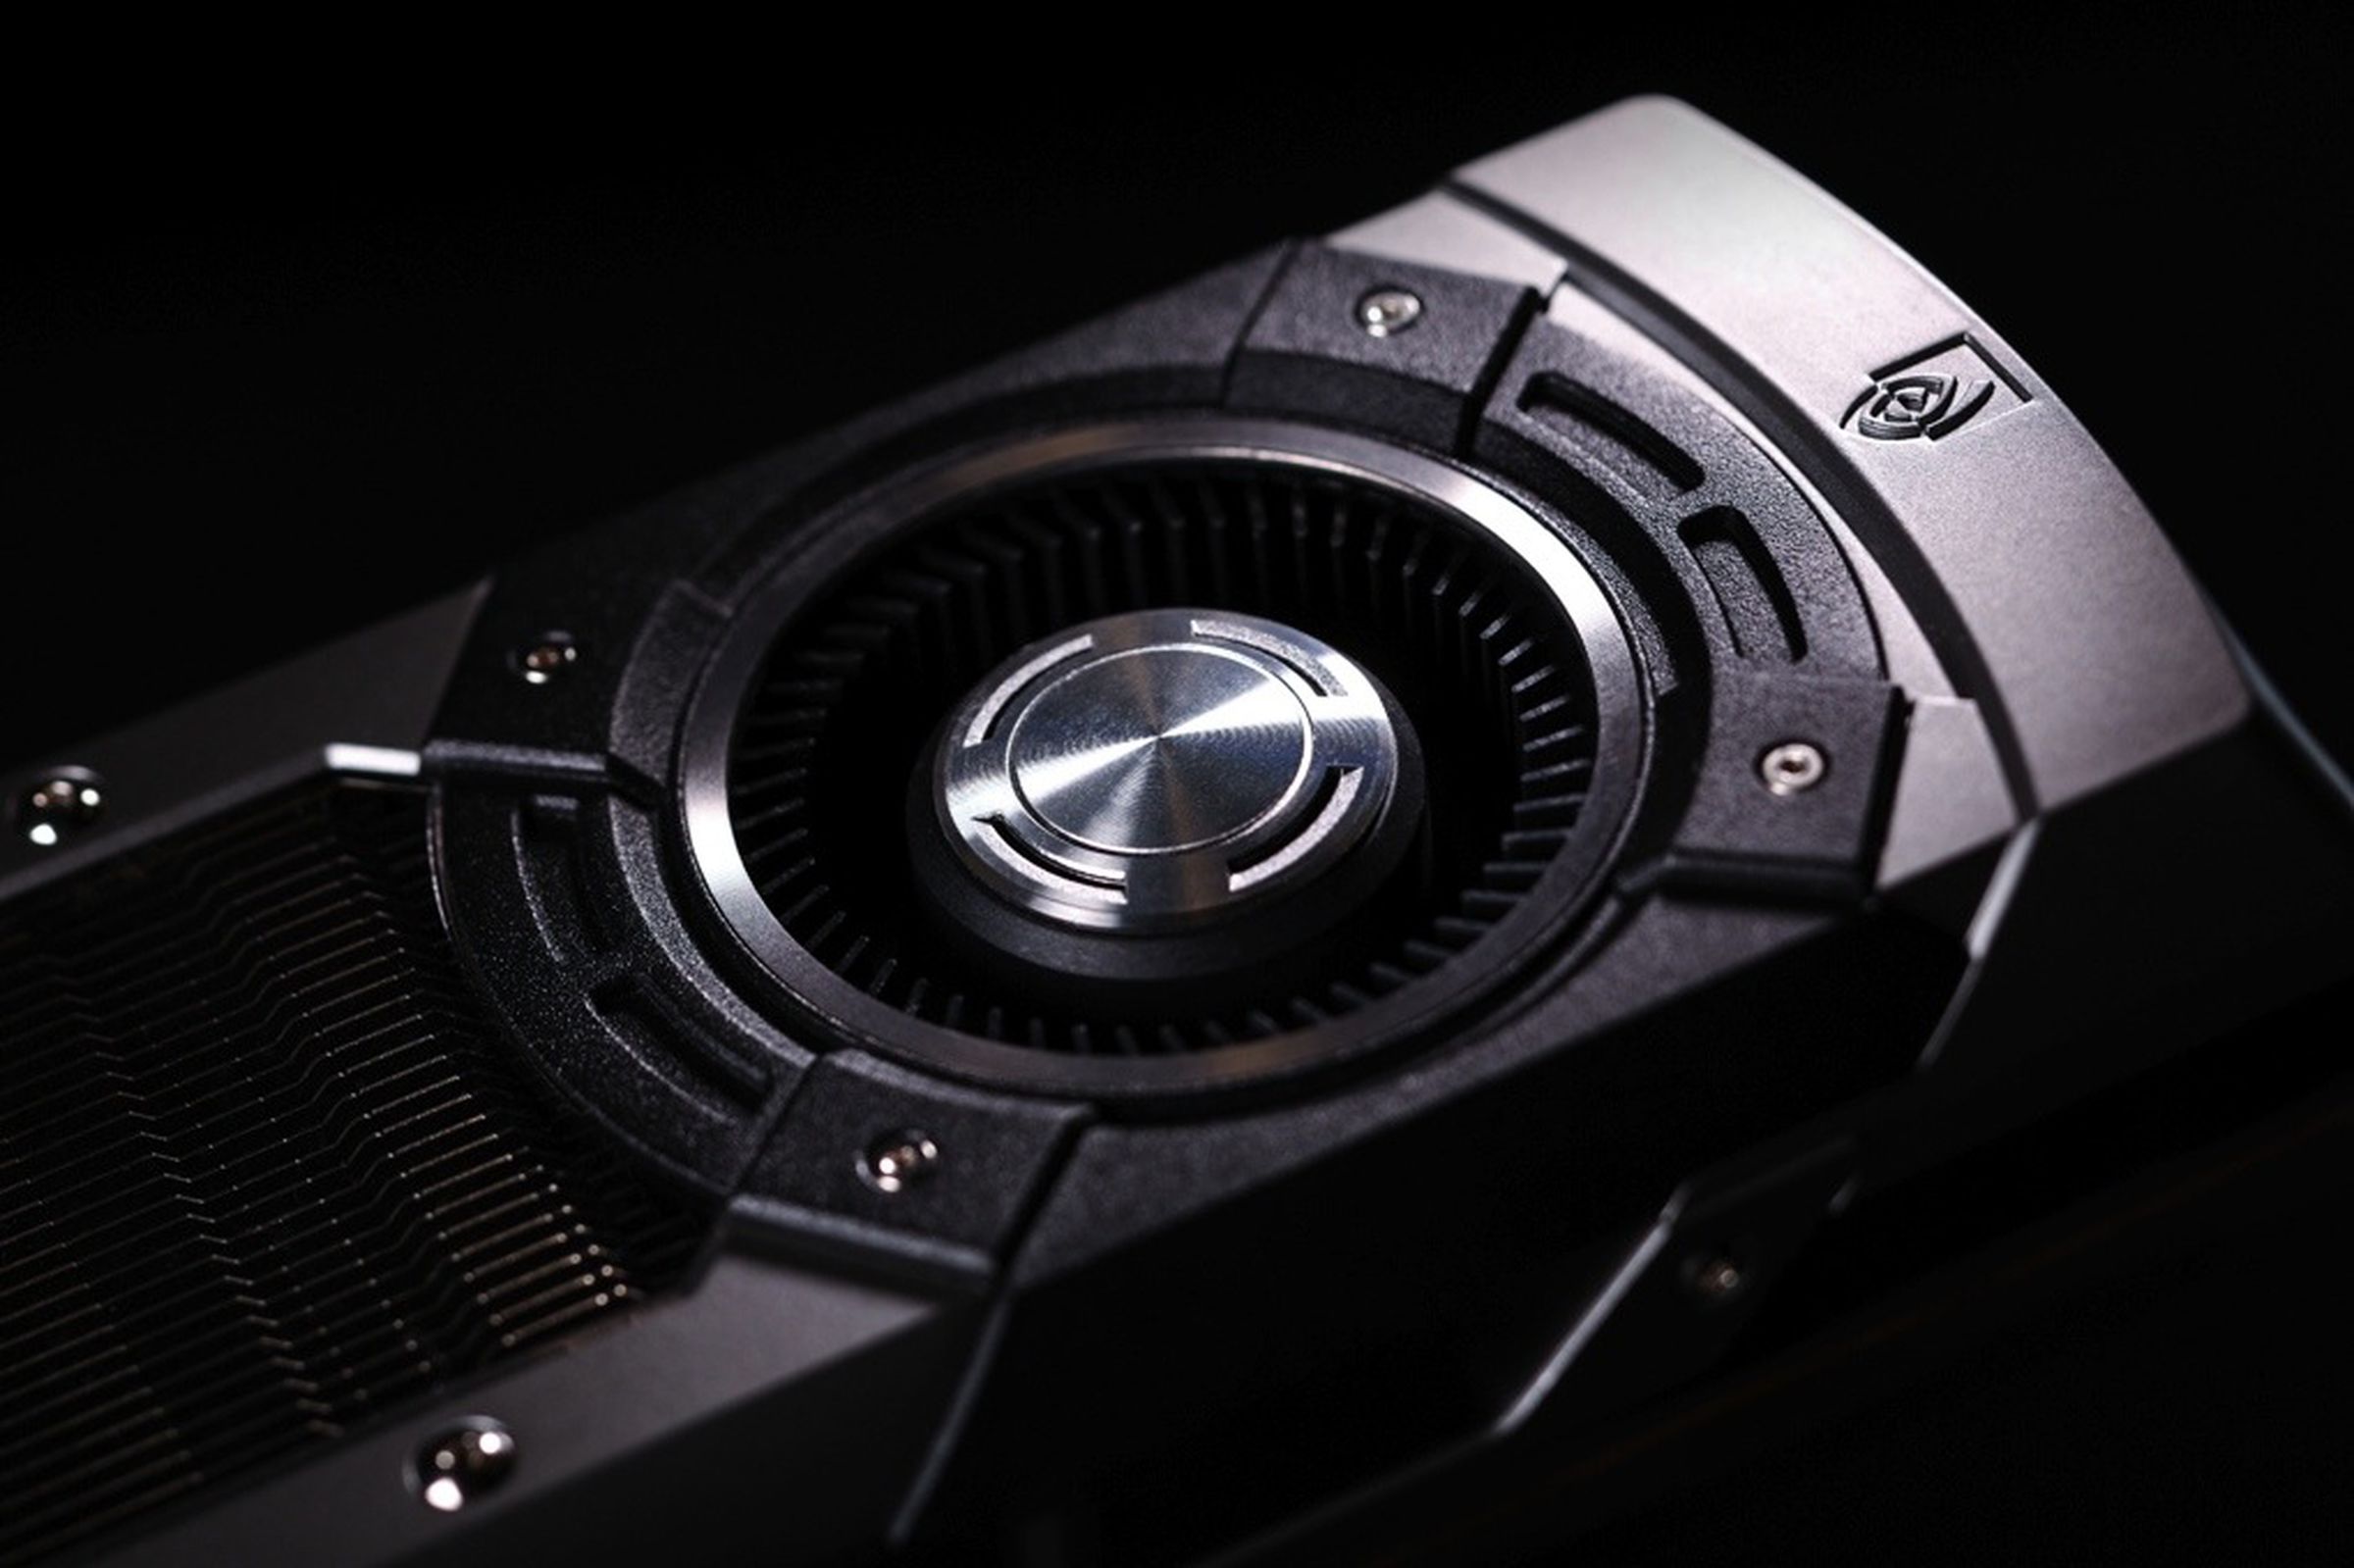 Nvidia GeForce GTX Titan press pictures